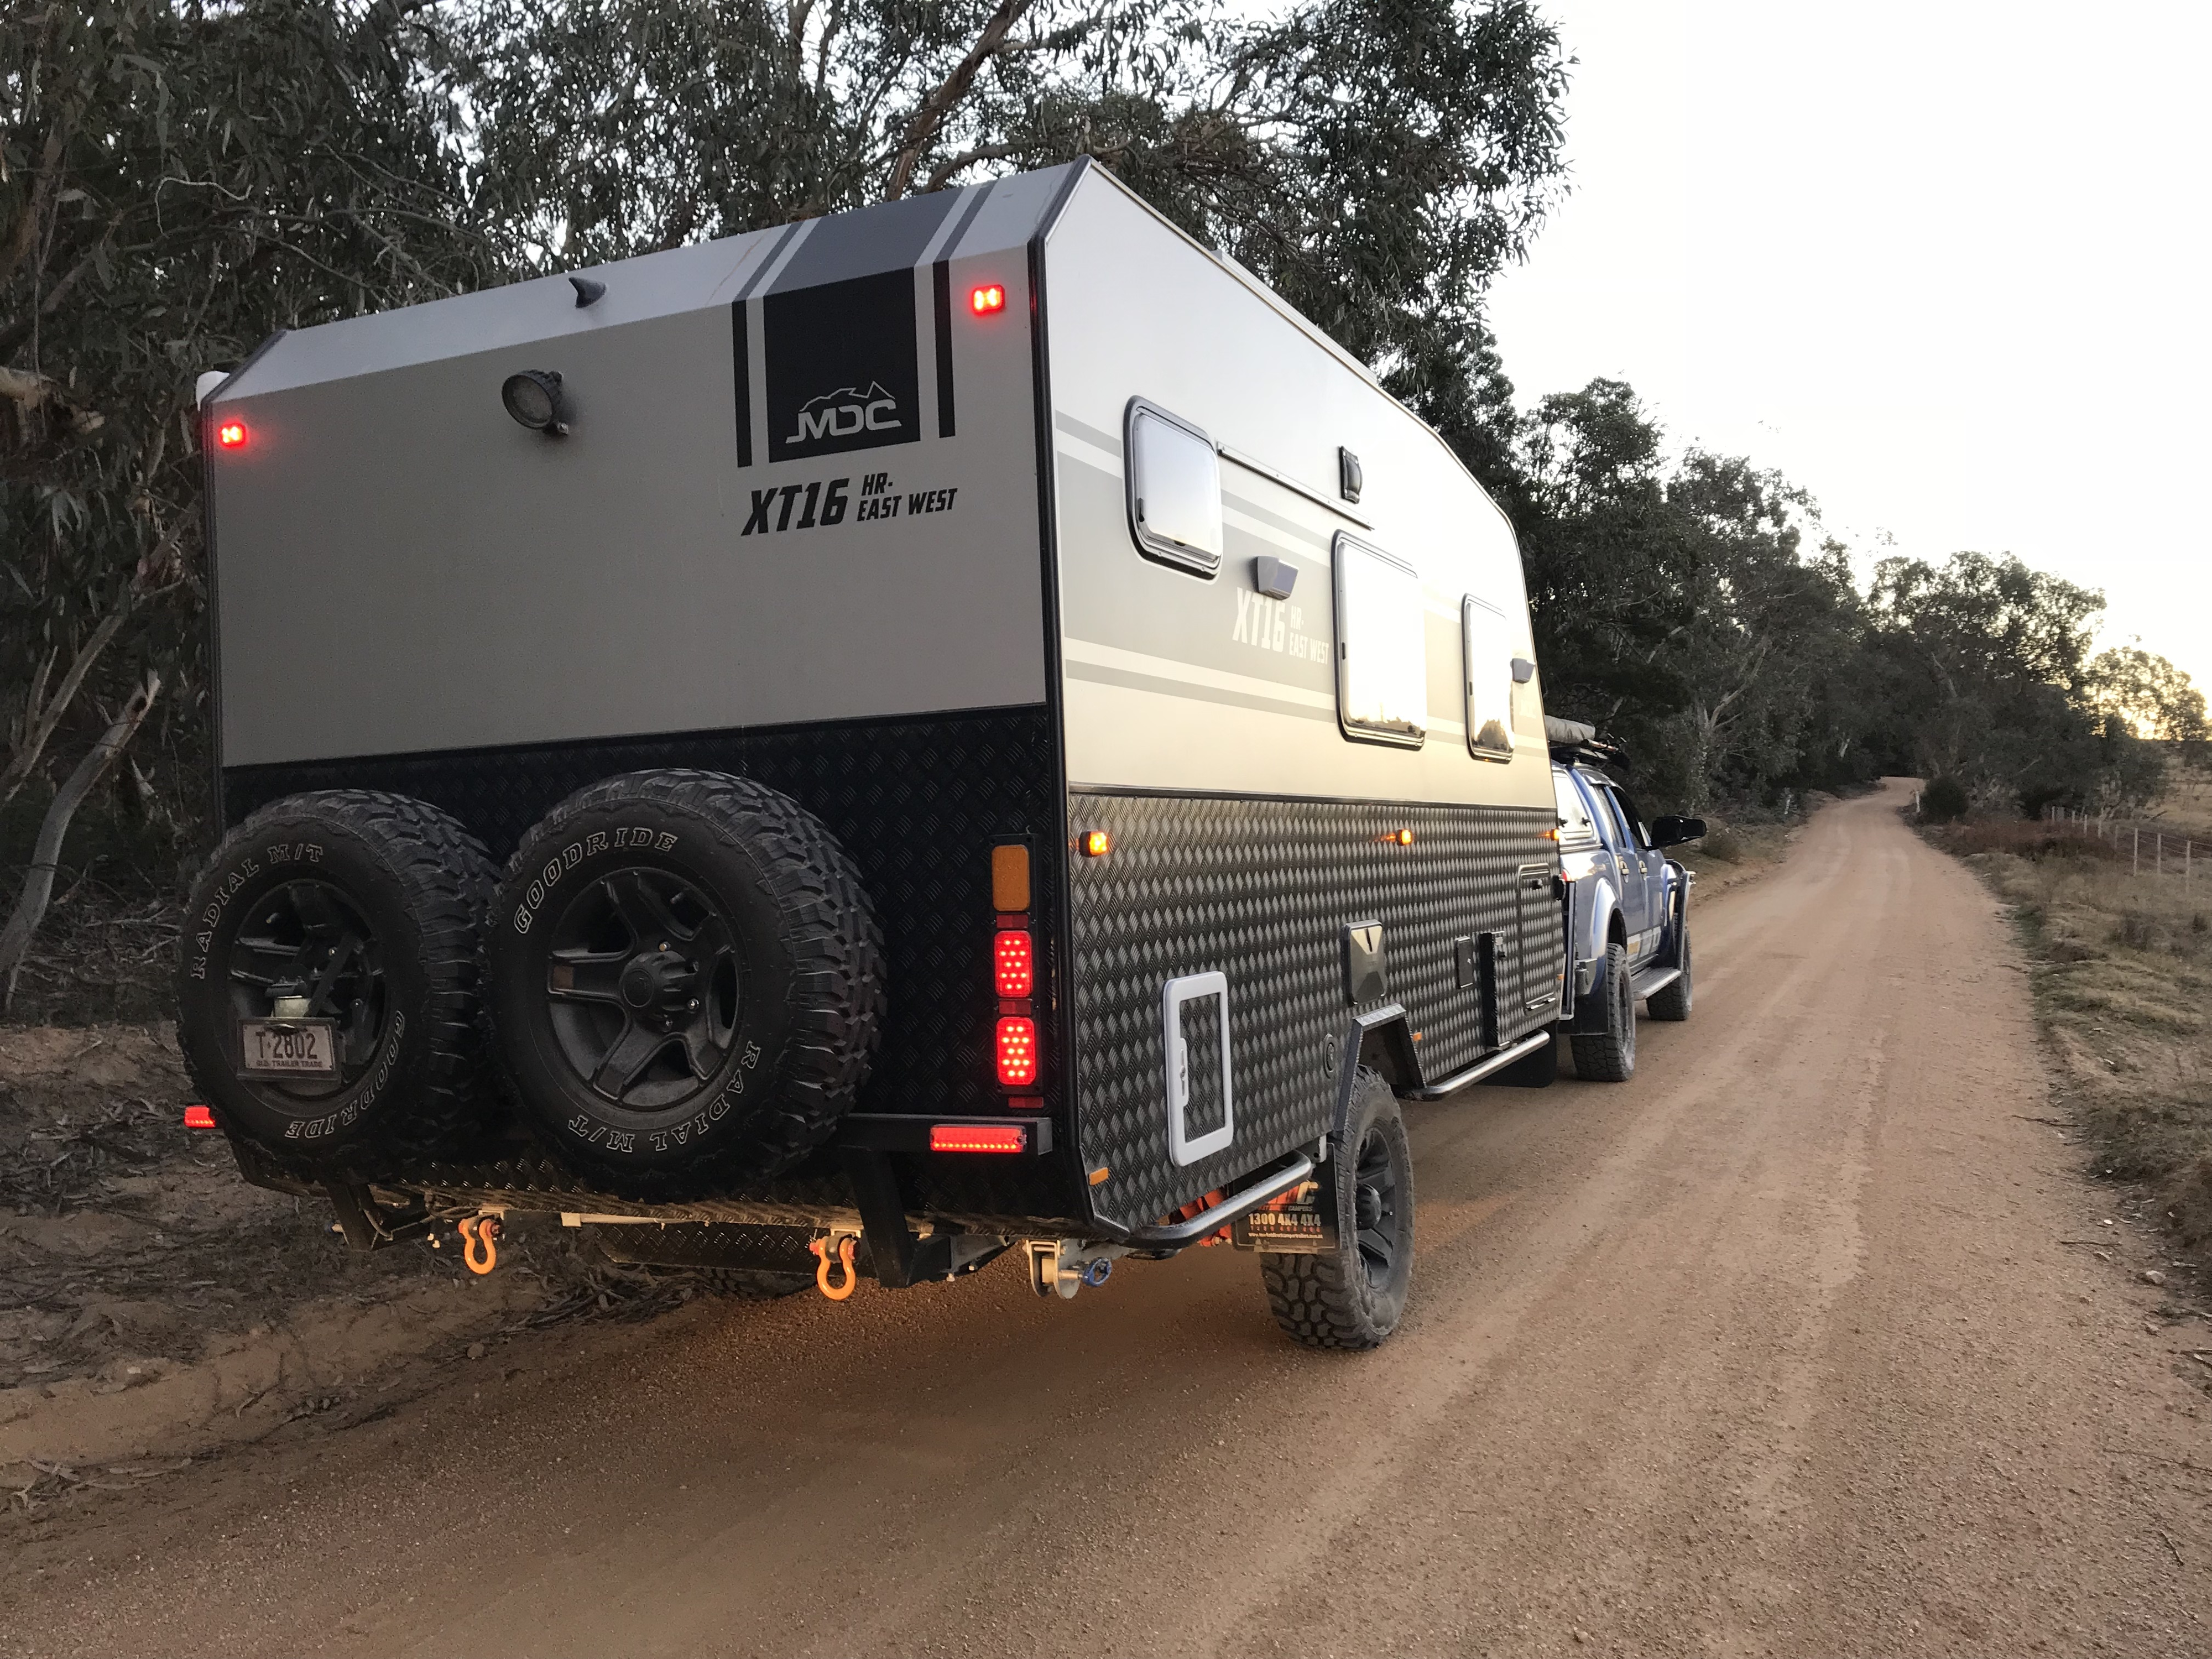 Road Trips Australia Episode 2